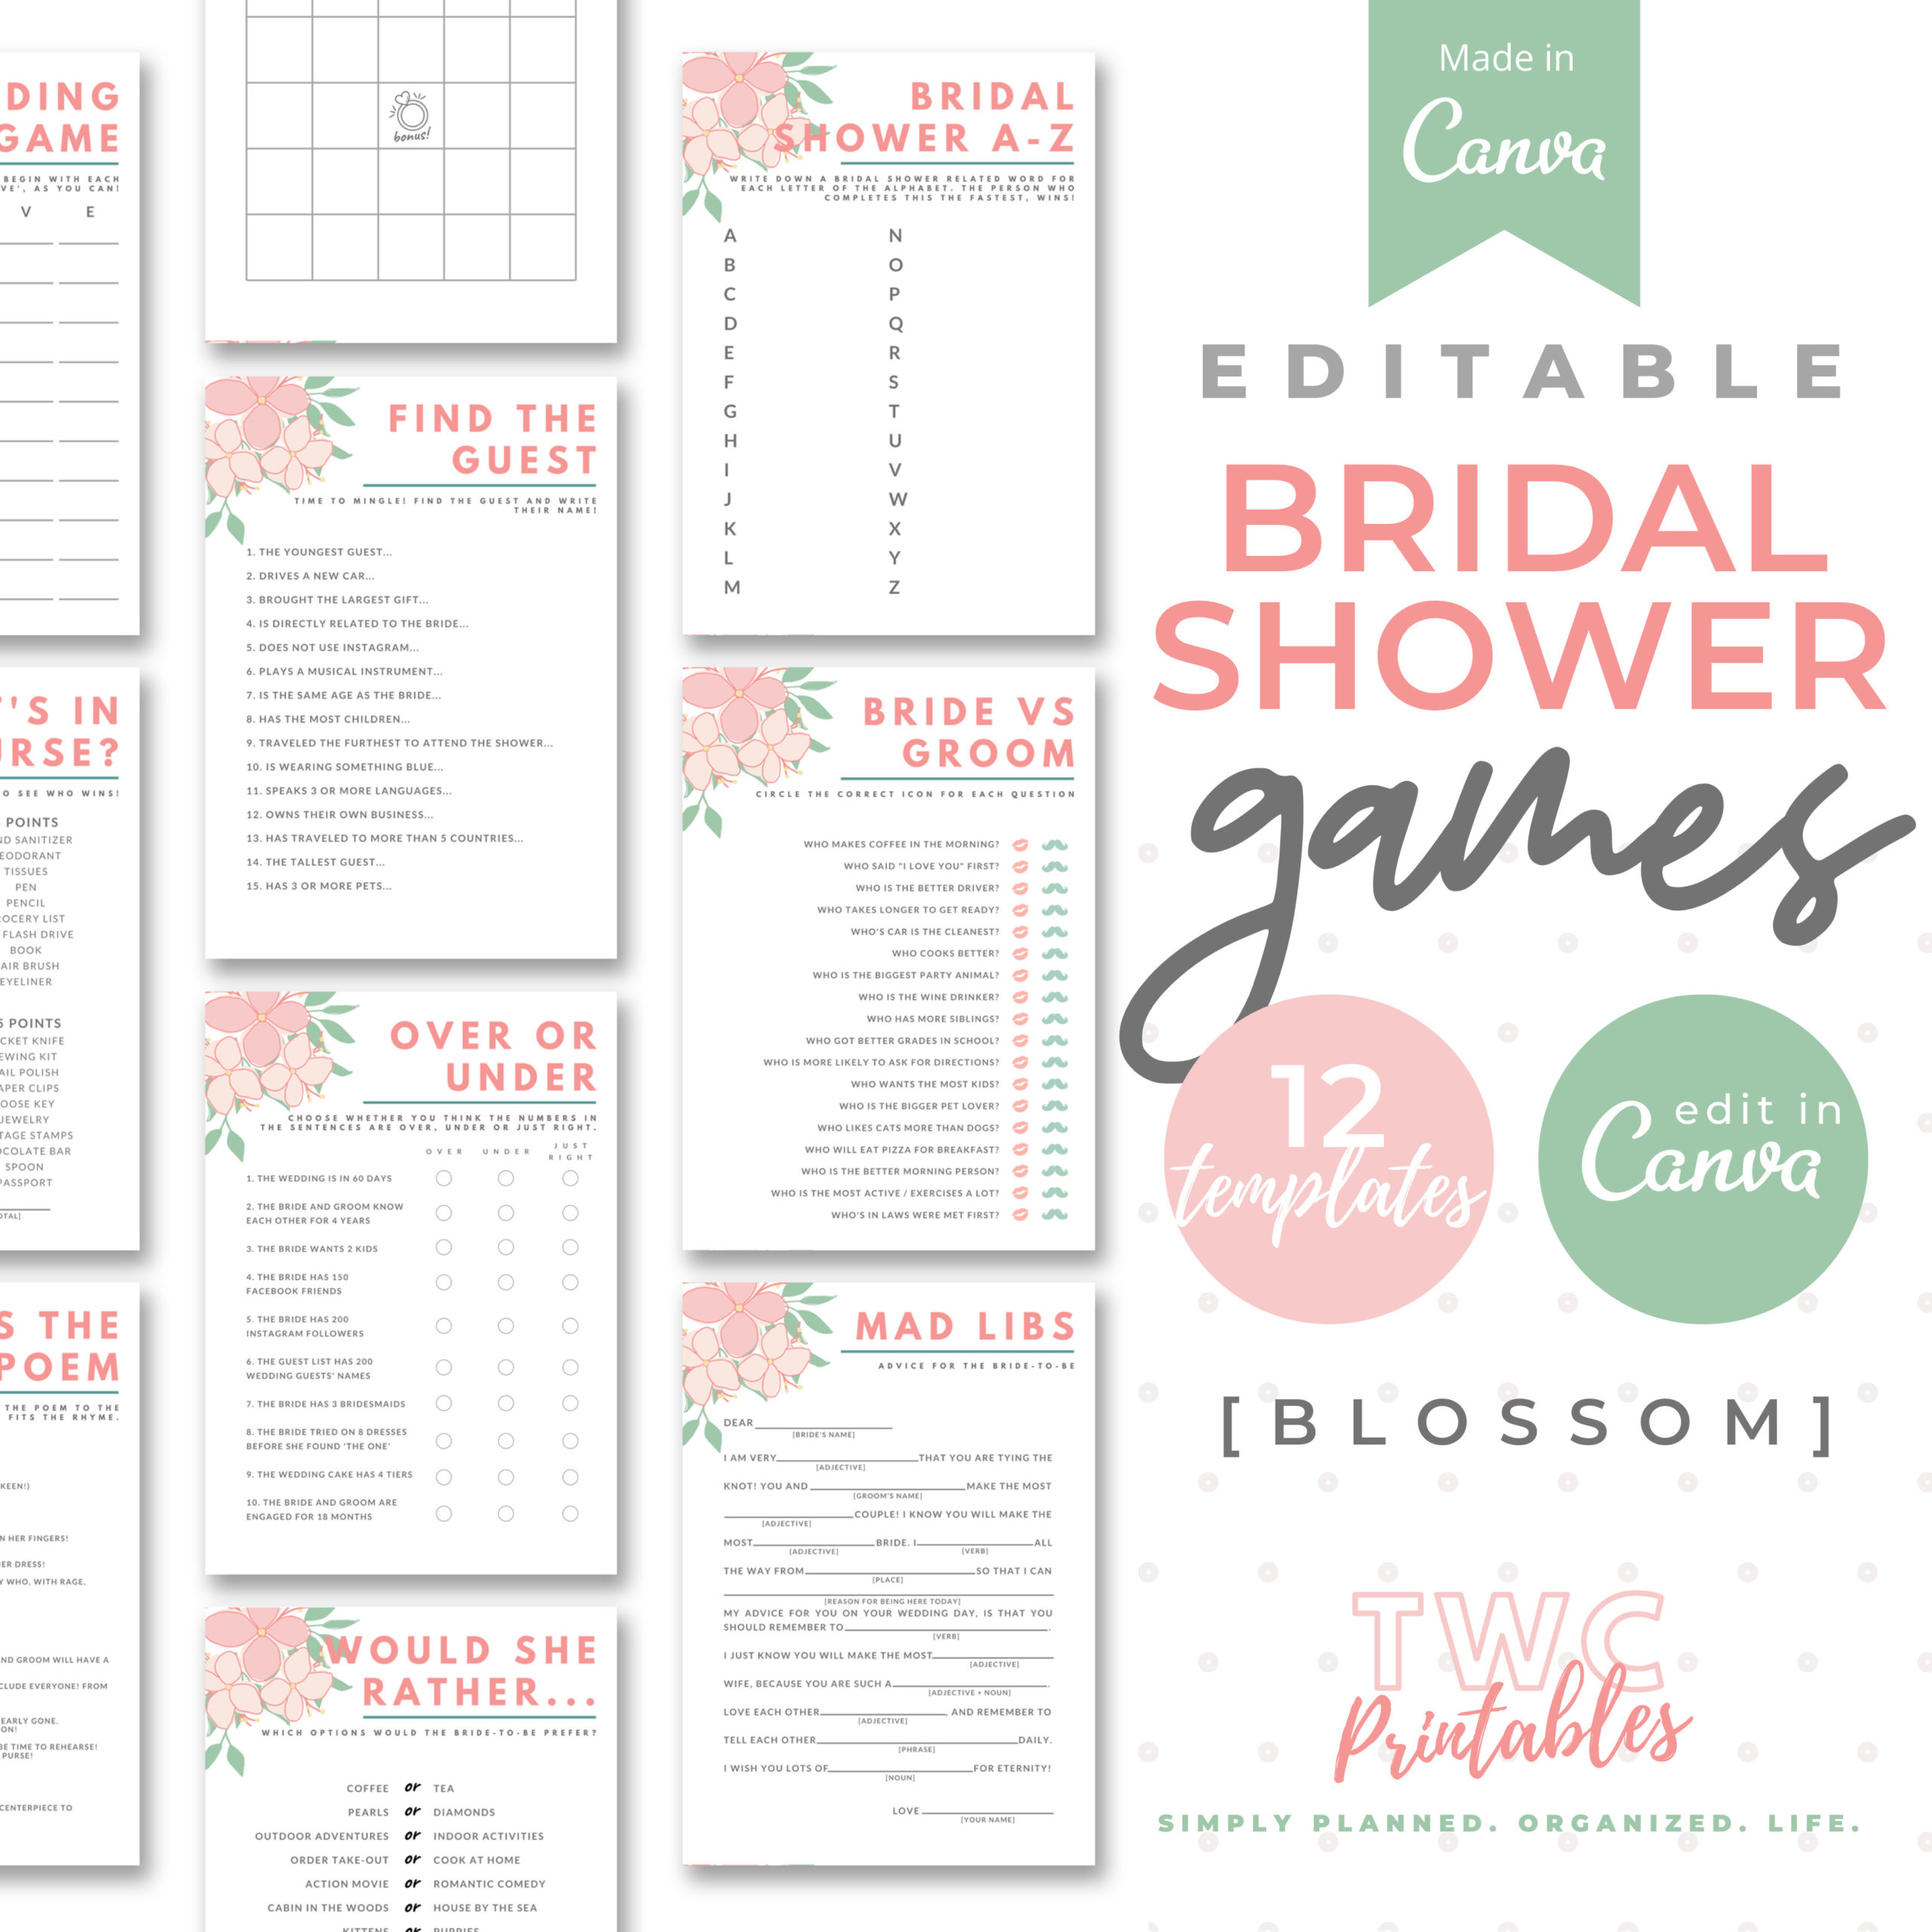 Editable Bridal Shower Games for Canva